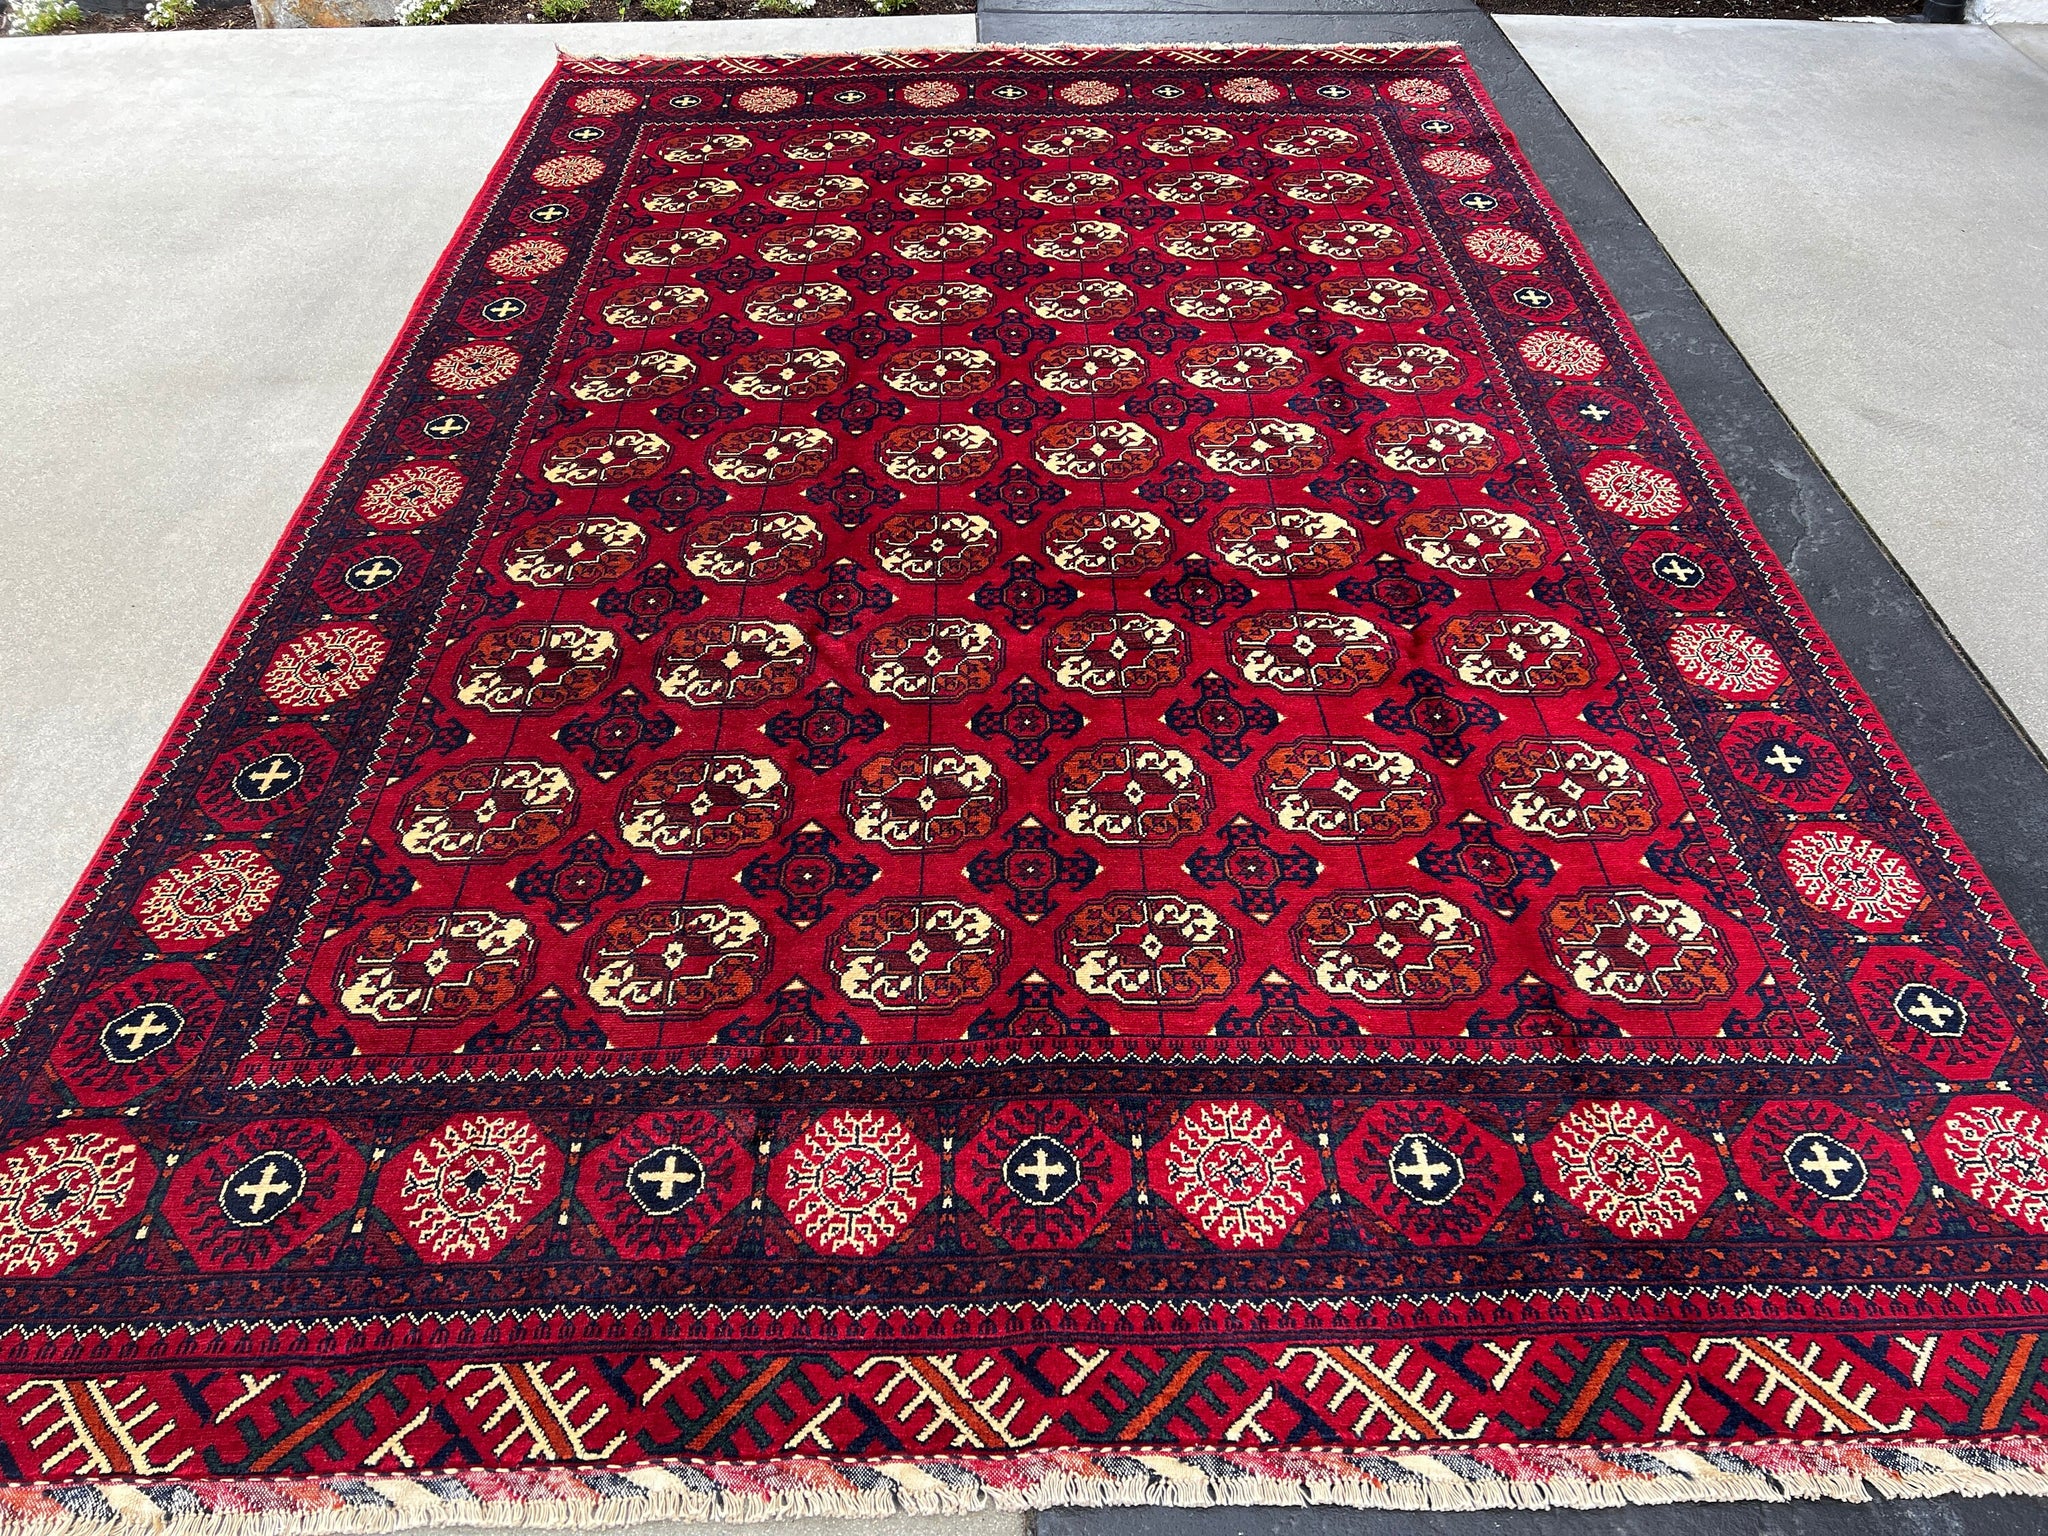 7x11 (210x322) Fair Trade Handmade Afghan Rug | Cherry Red Black Burnt Orange Crimson Red Cream Beige | Hand Knotted Floral Persian Wool